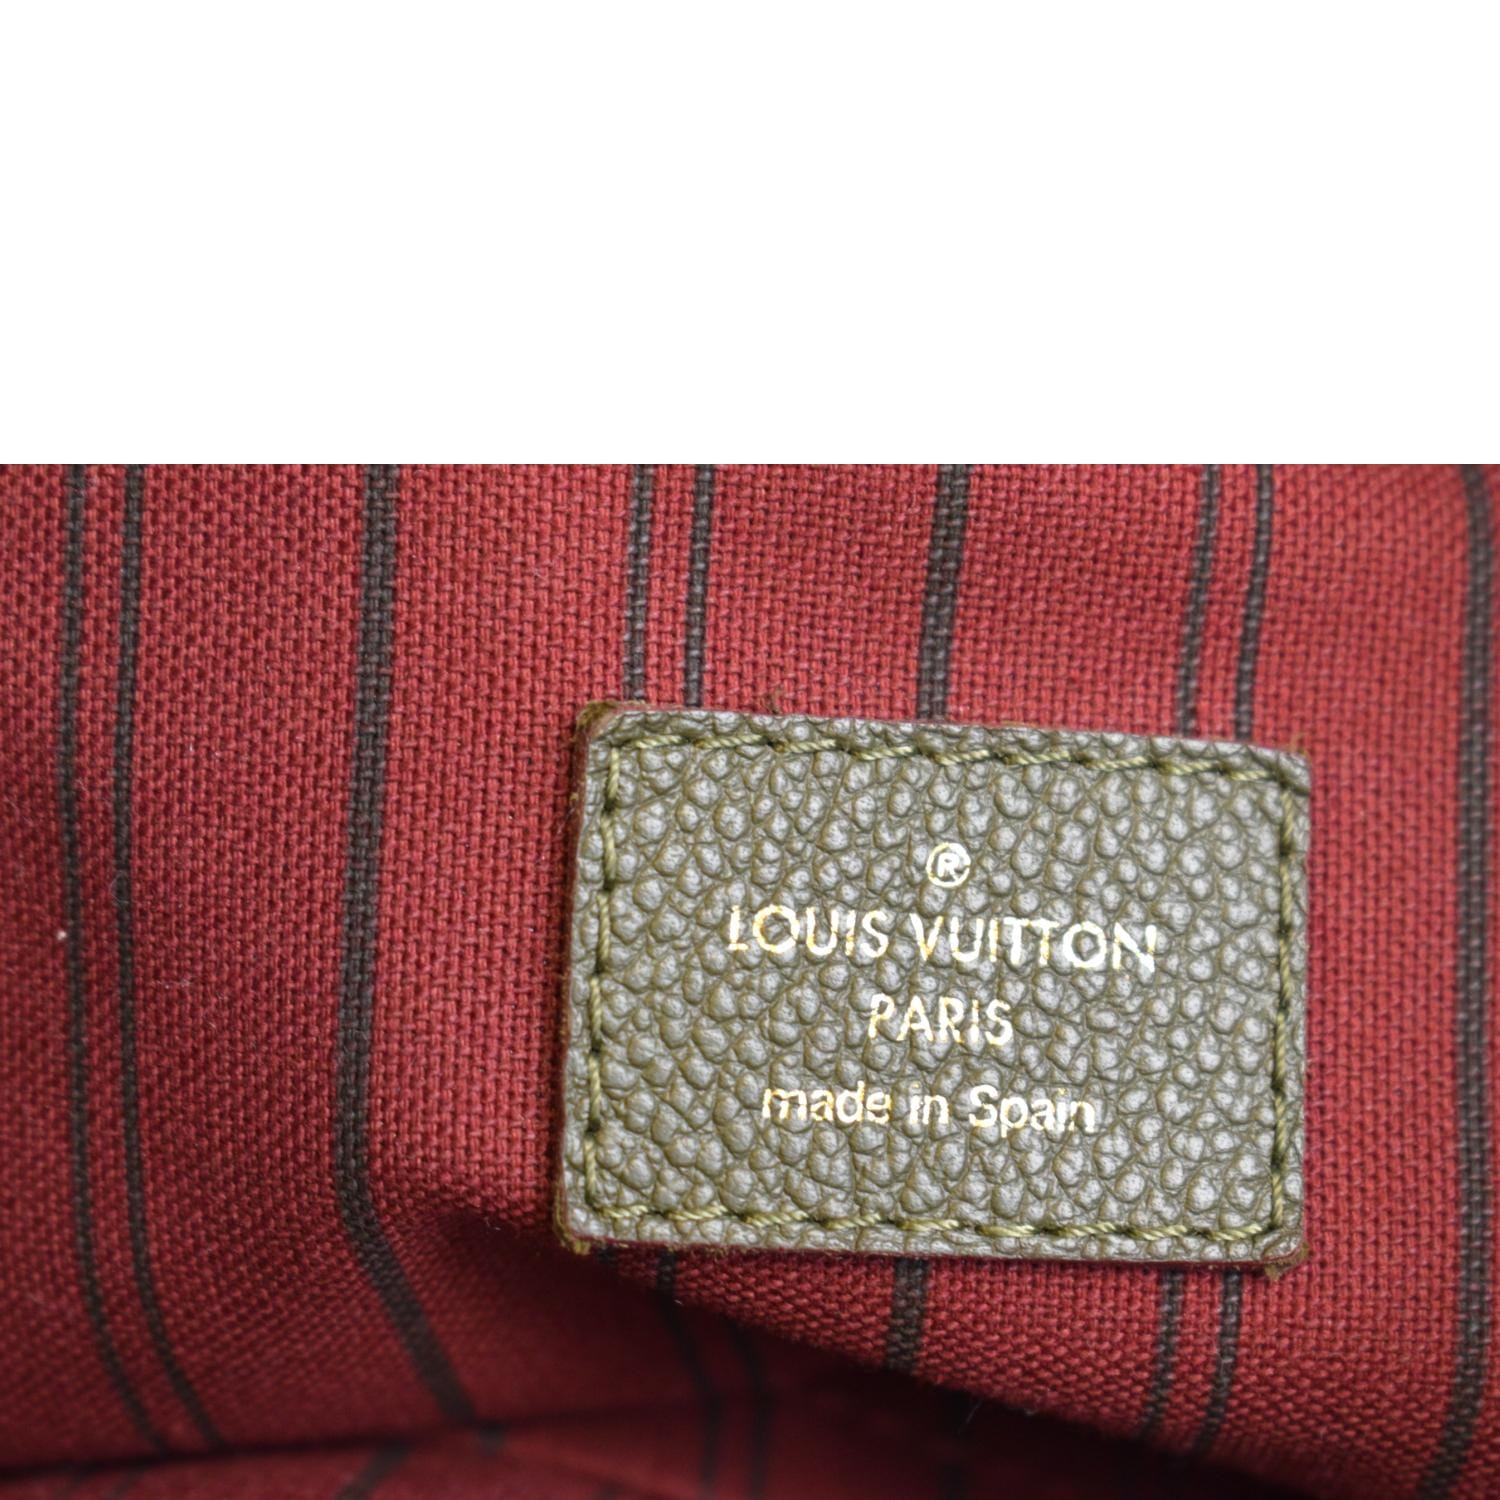 natures-first-green-is-gold  Louis vuitton artsy, Vuitton, Louis vuitton  handbags